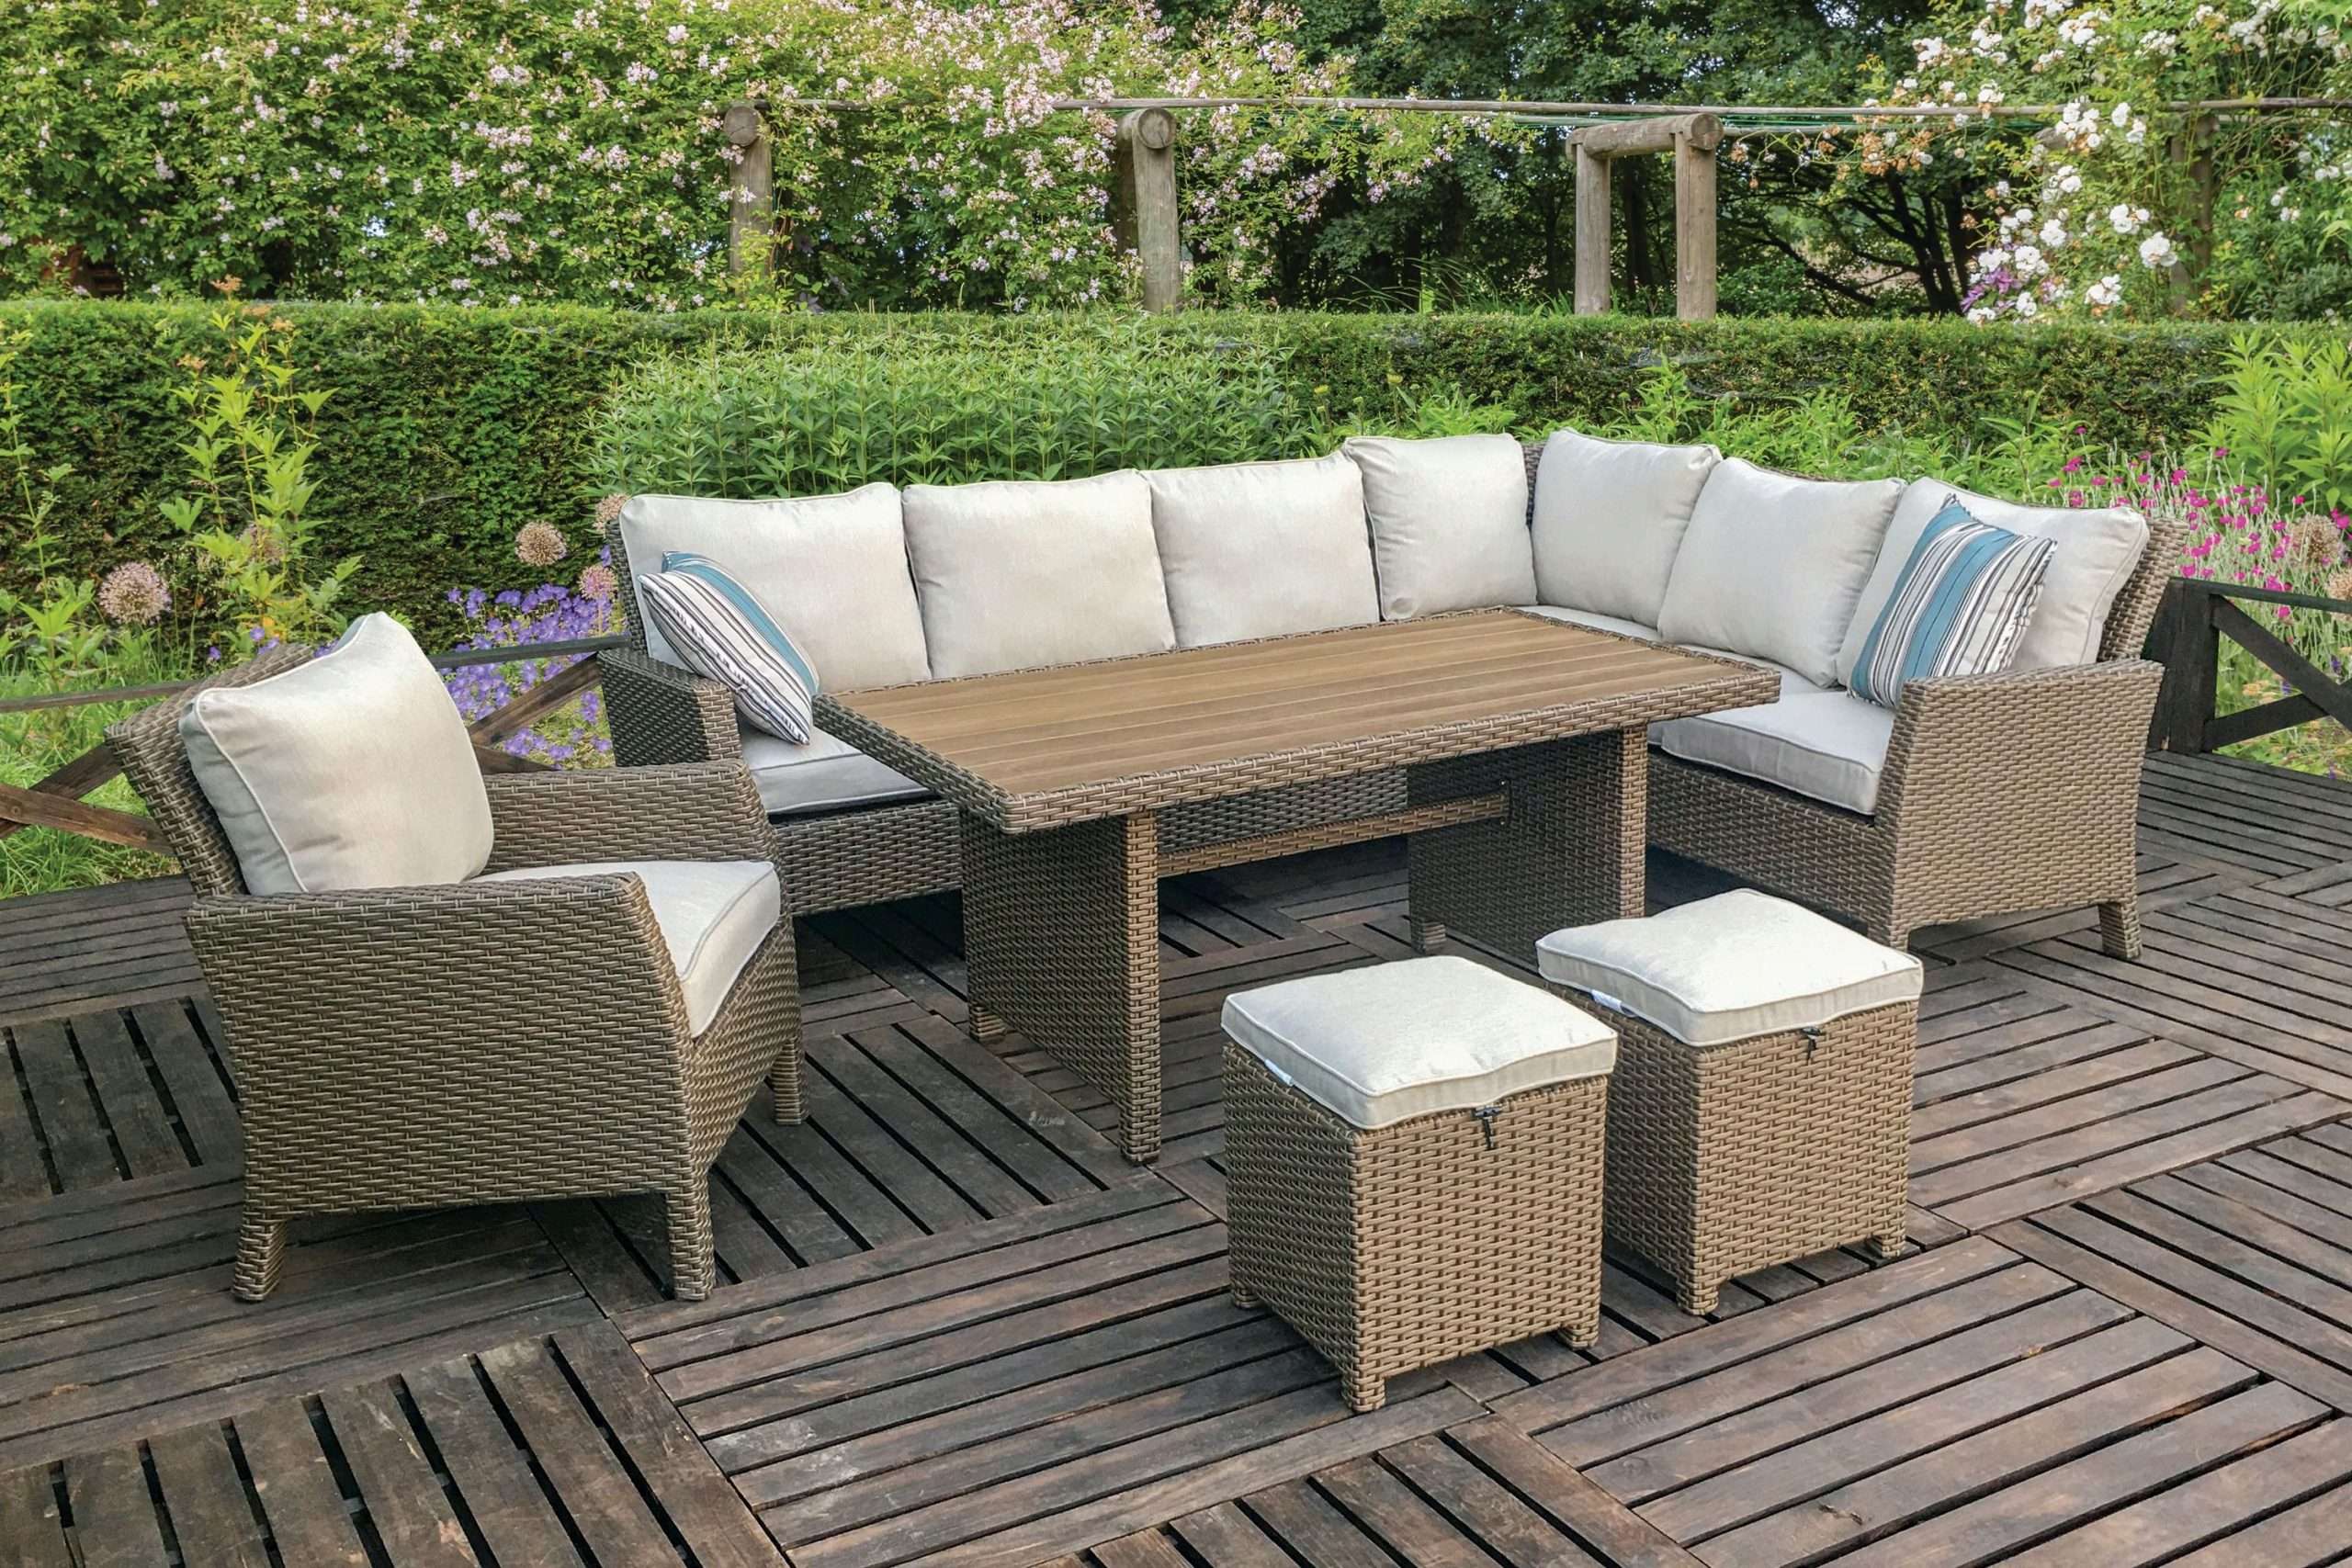 Cheap garden supplies: Rc willey outdoor furniture